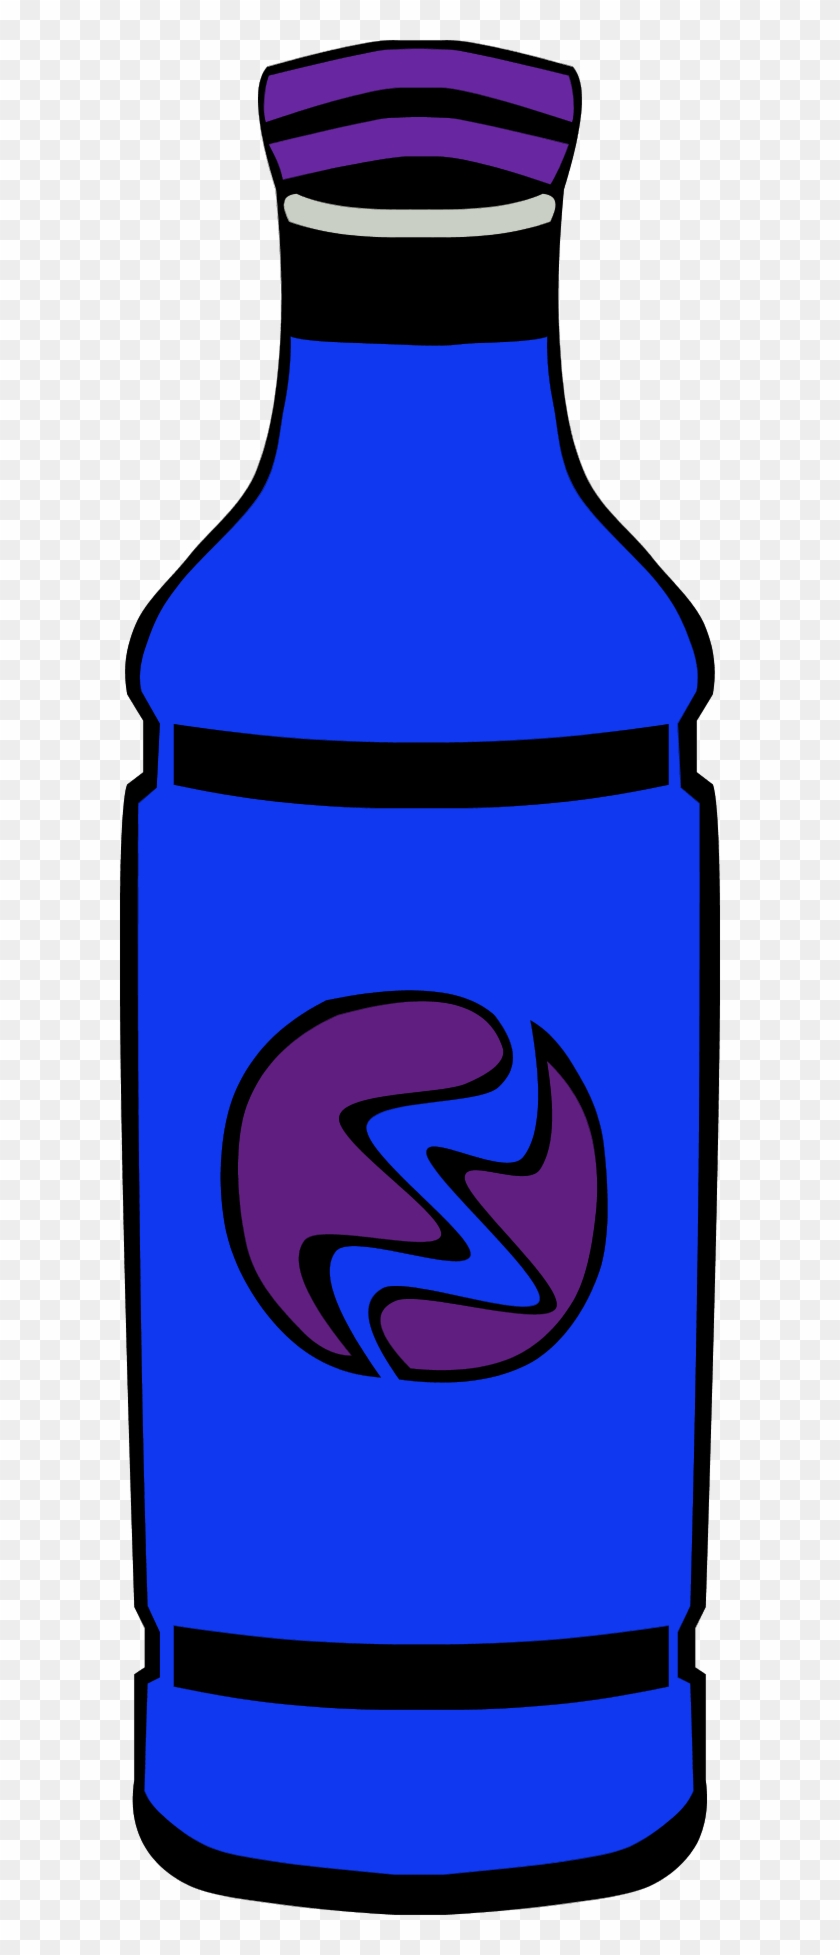 Orange Juice Bottle Vector Clip Art - Blue Bottle Clip Art #417406